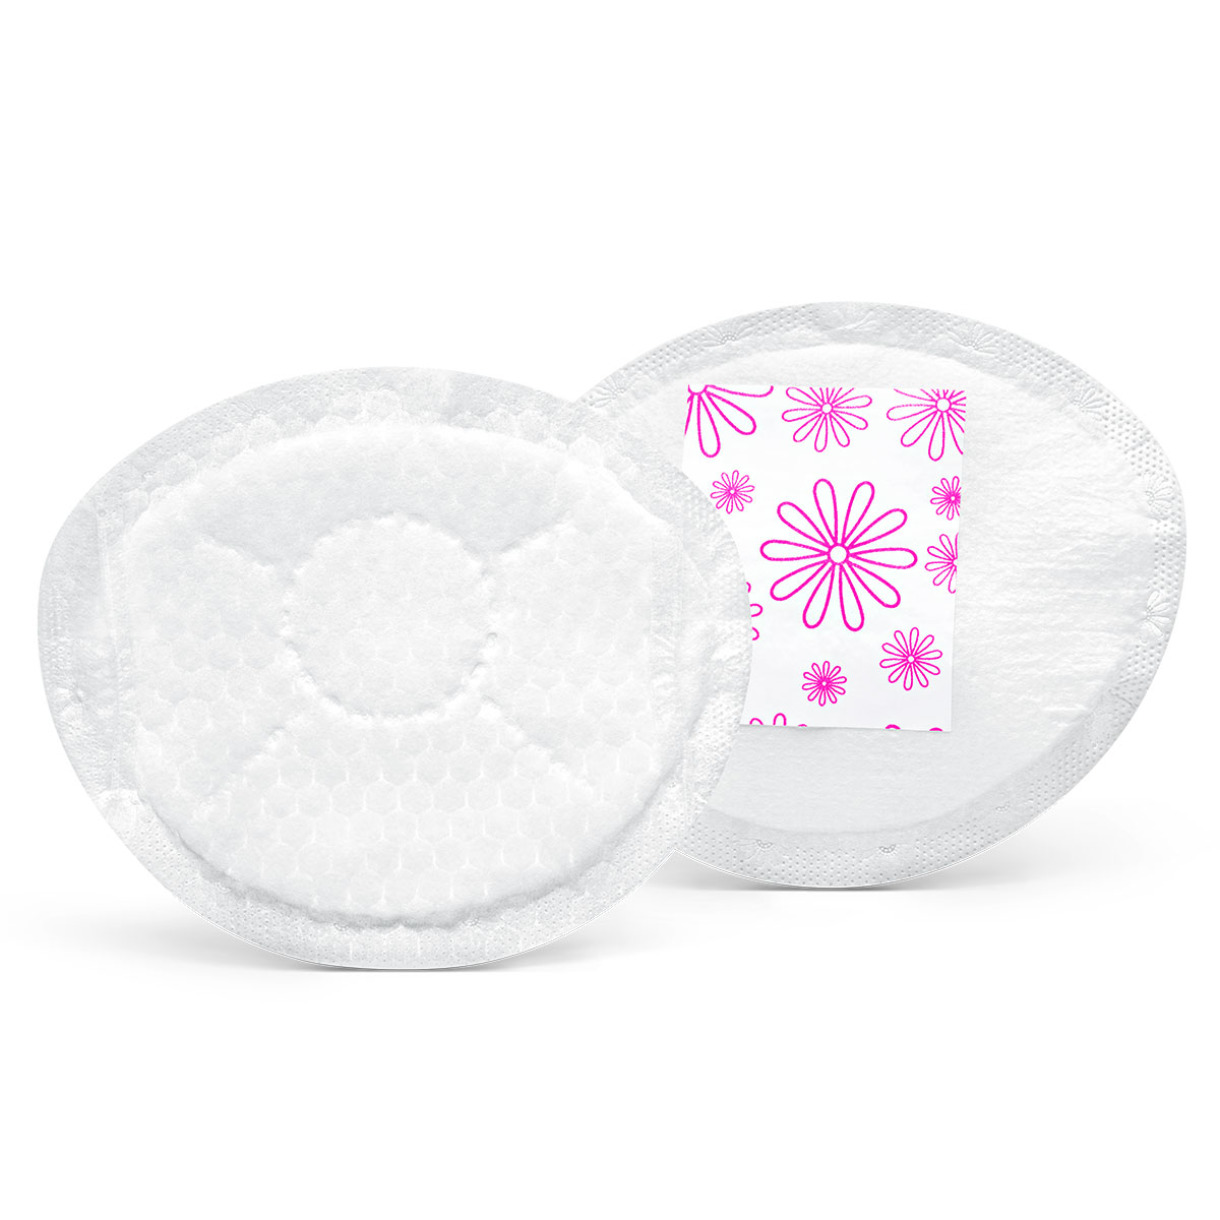 Medela Прокладки одноразові ультратонкі (Disposable nursing pads Pads), 30 шт - купить в интернет-магазине Юнимед